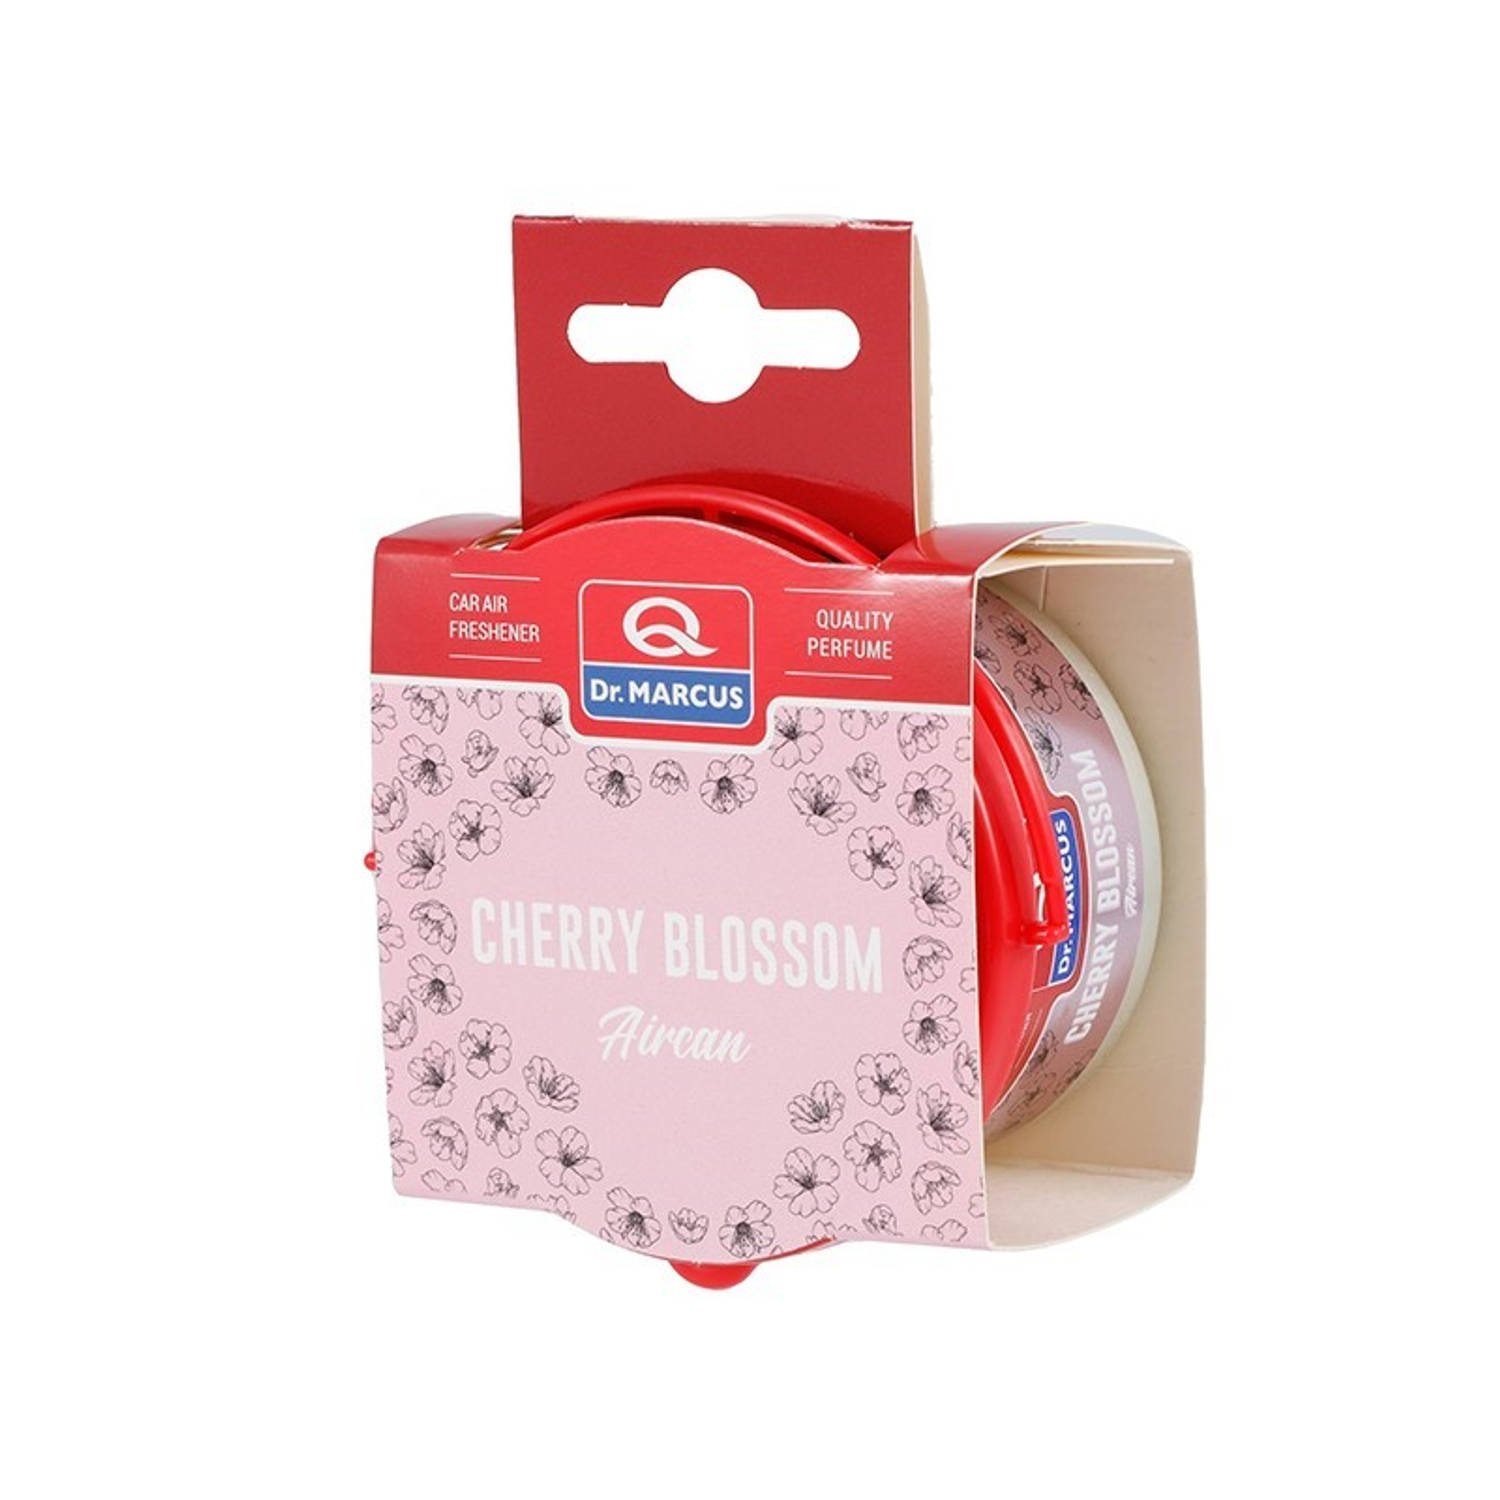 Dr. Marcus Aircan Cherry Blossom luchtverfrisser met neutrafresh technologie 40 gram